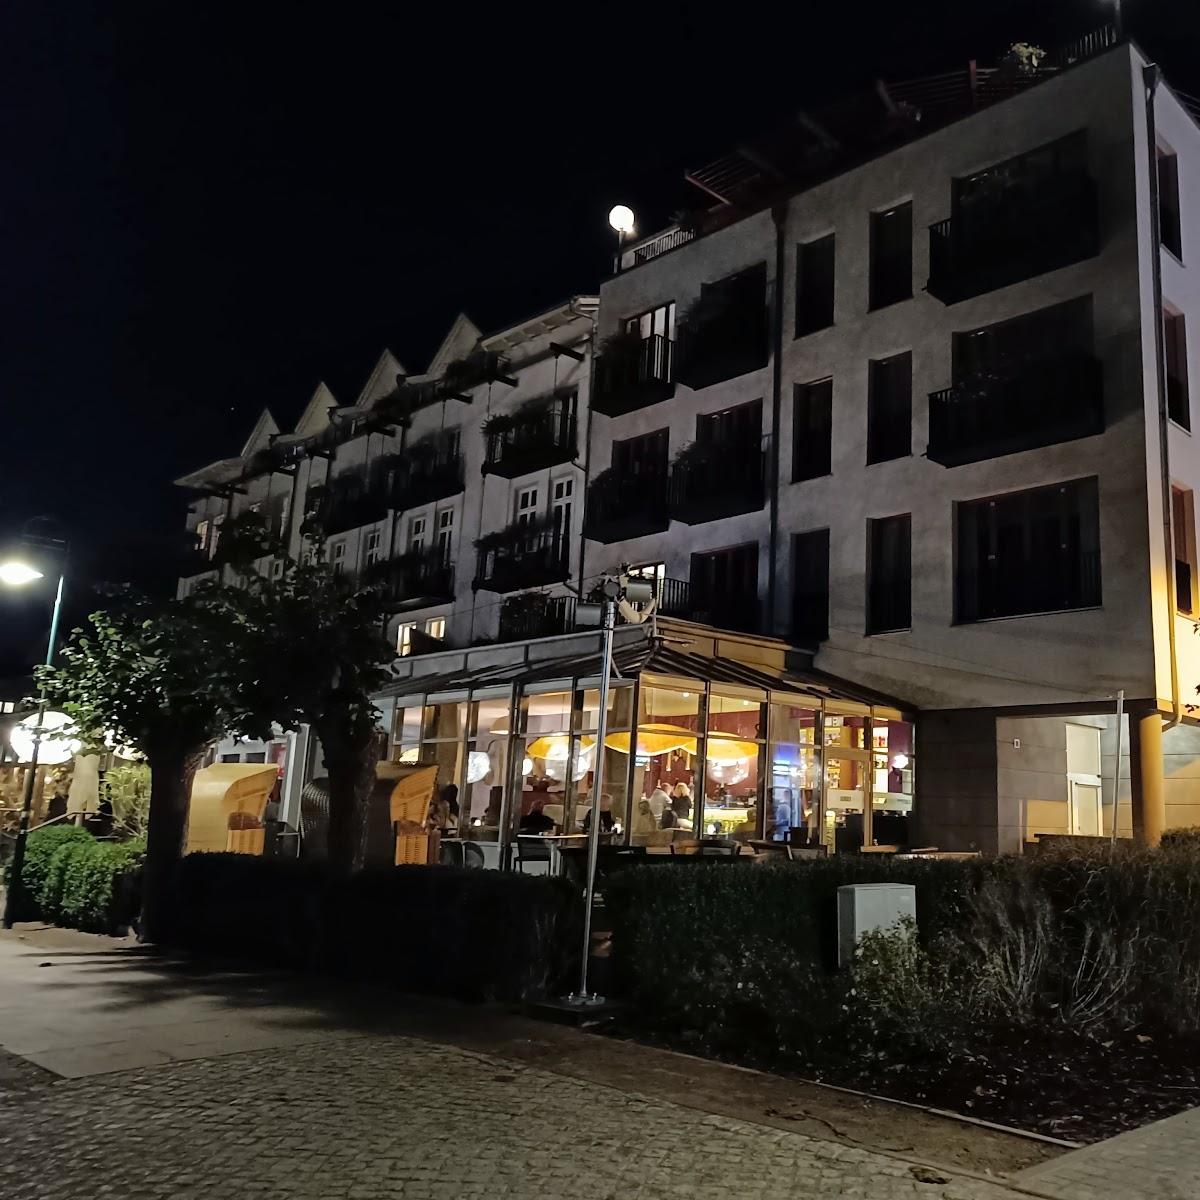 Restaurant "Safaribar" in Heringsdorf